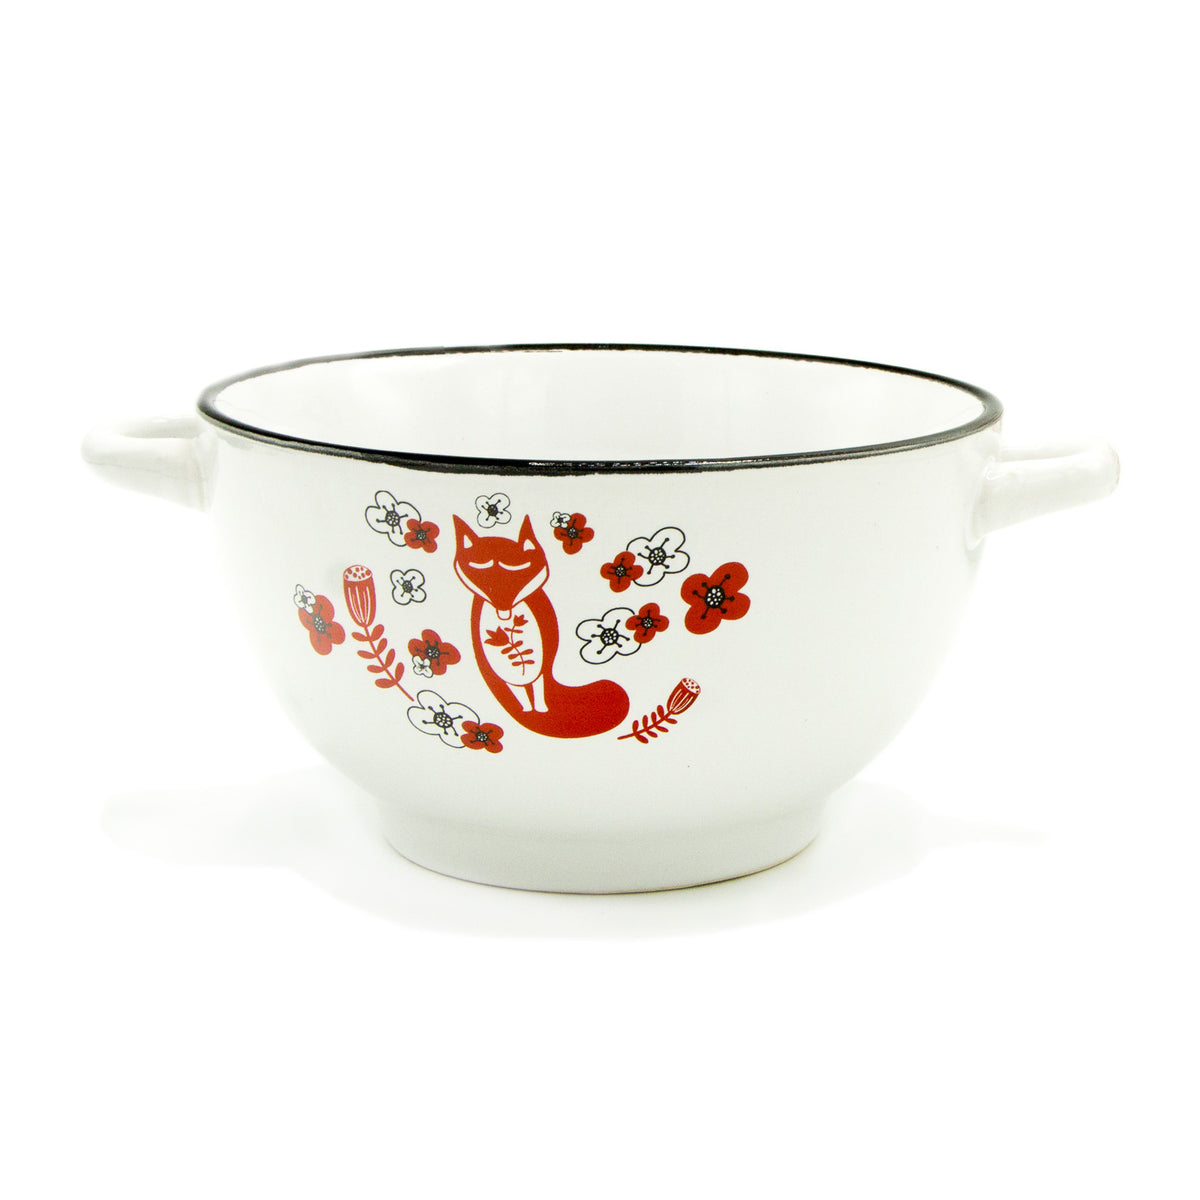 Bake & Serve - Large Ceramic Soup Bowls With Handles - 30 Ounce - Set -  ecodesign-us